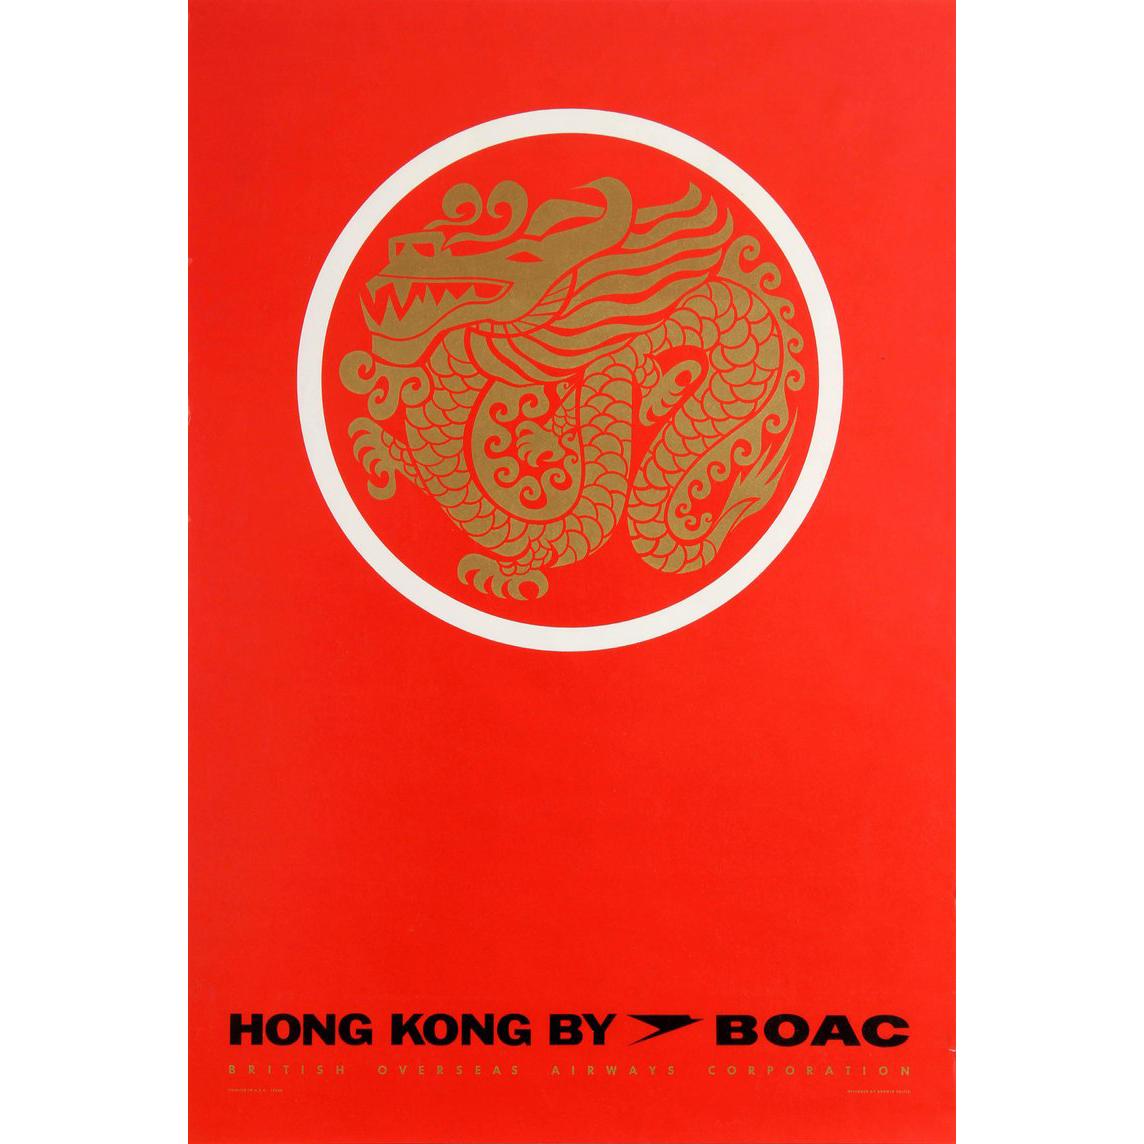 Original Vintage Air Travel Poster for Hong Kong by BOAC Ft. Gold Dragon Design